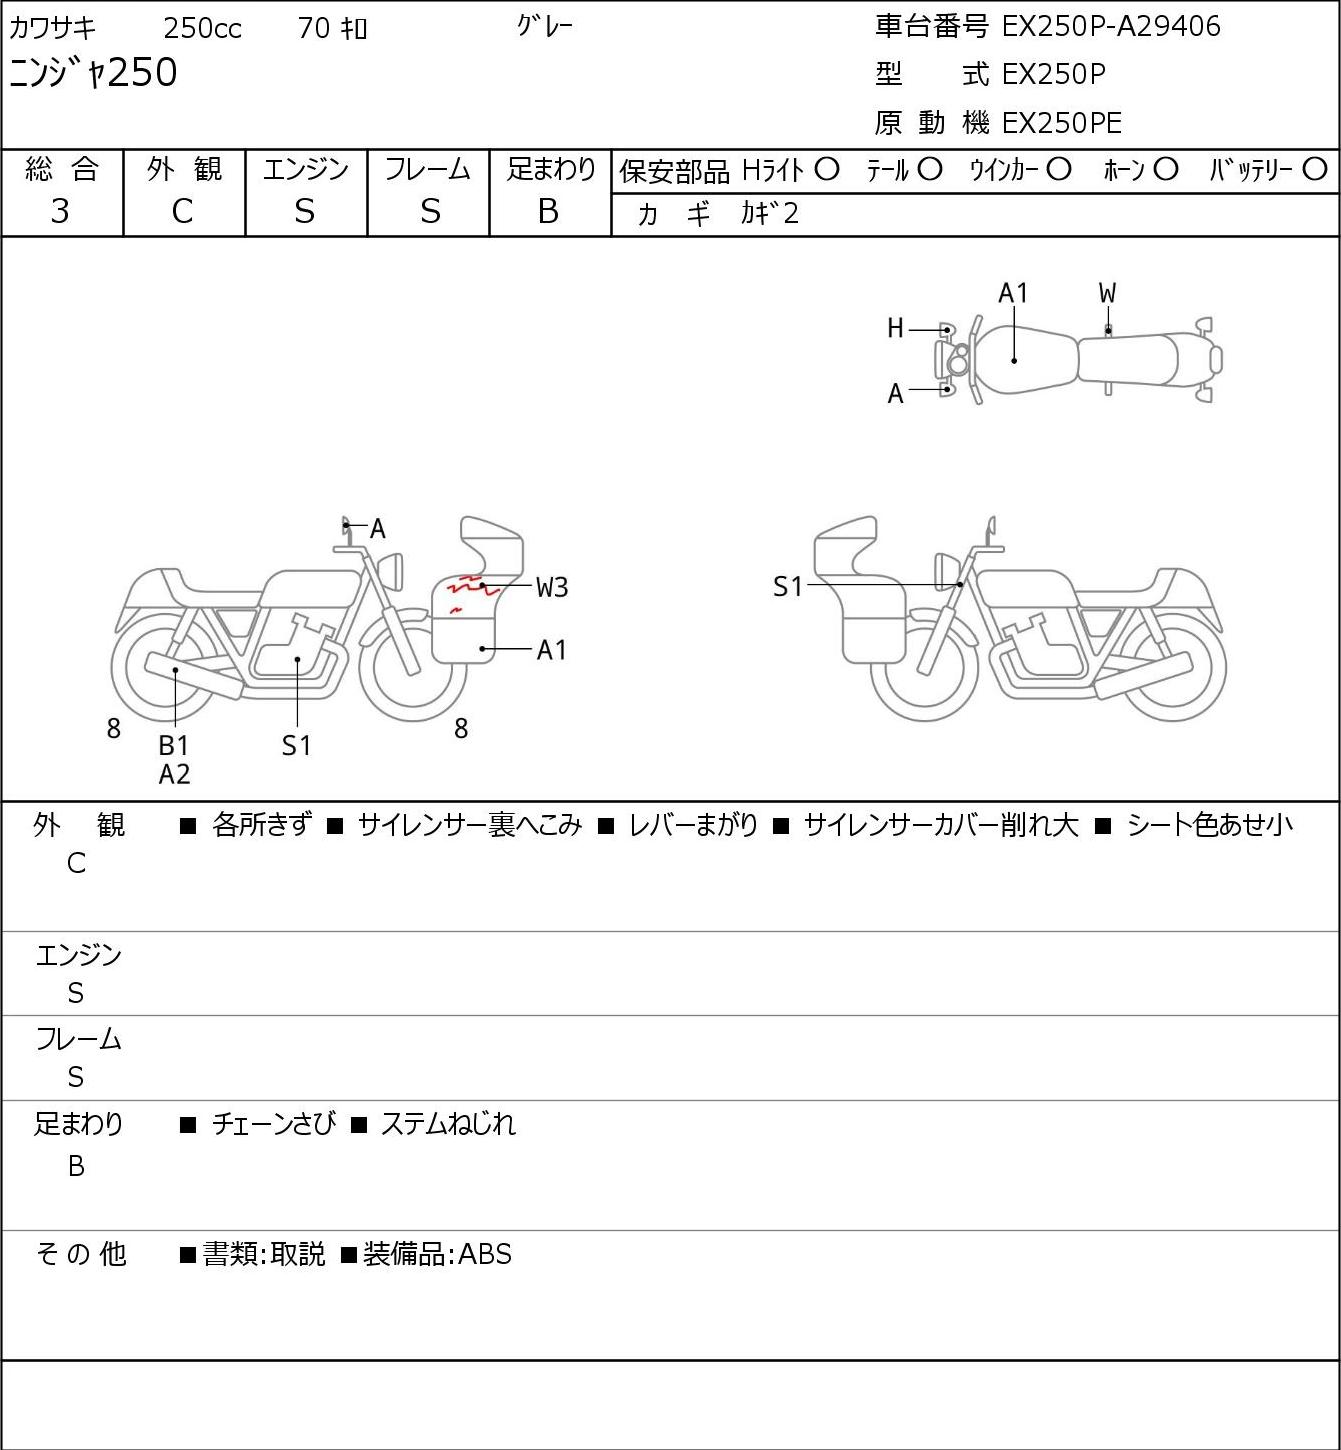 Kawasaki NINJA 250 EX250P - купить недорого